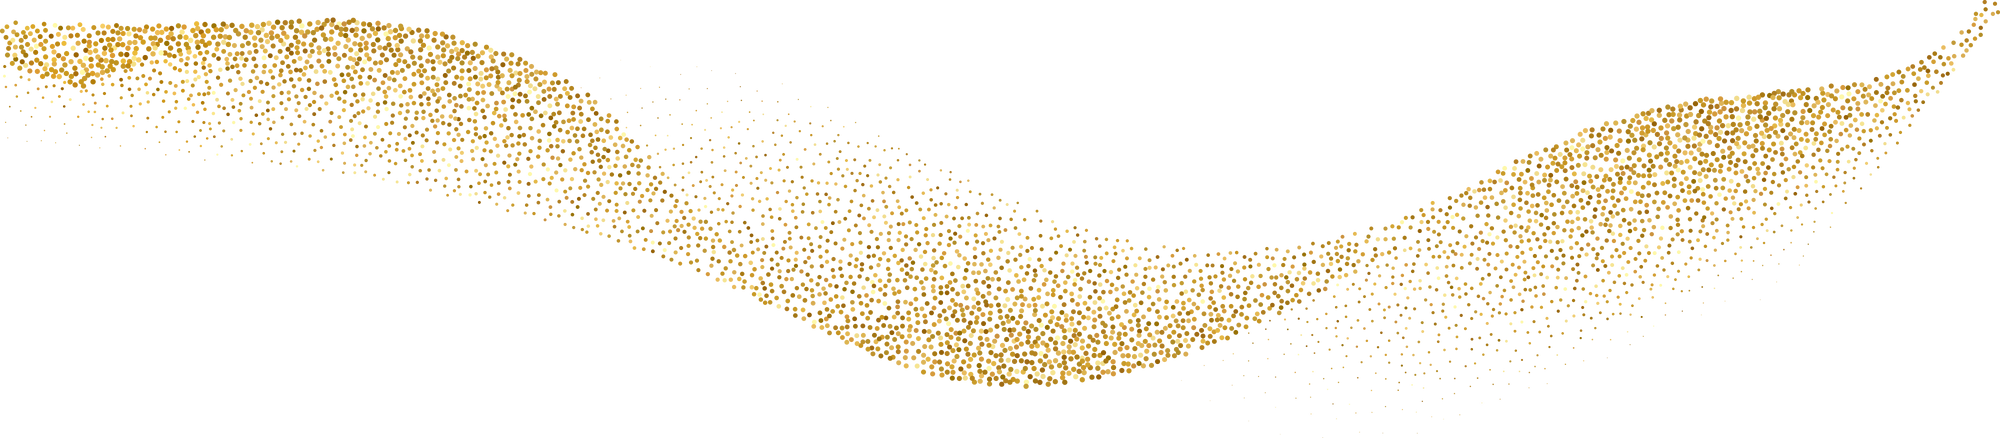 Gold glitter wave 